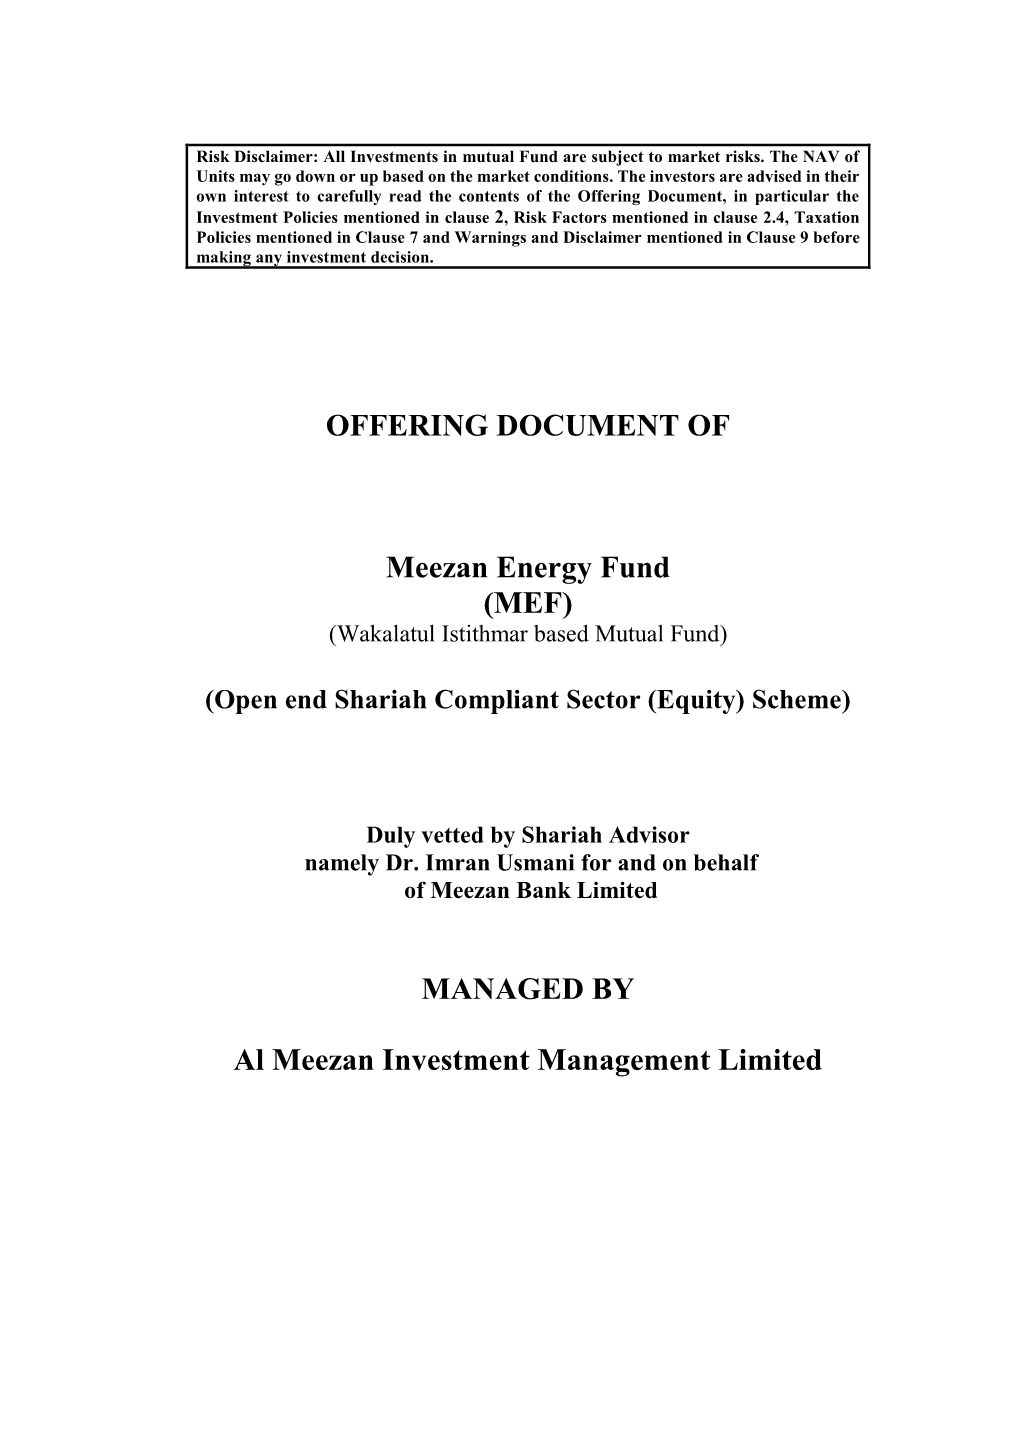 OFFERING DOCUMENT of Meezan Energy Fund